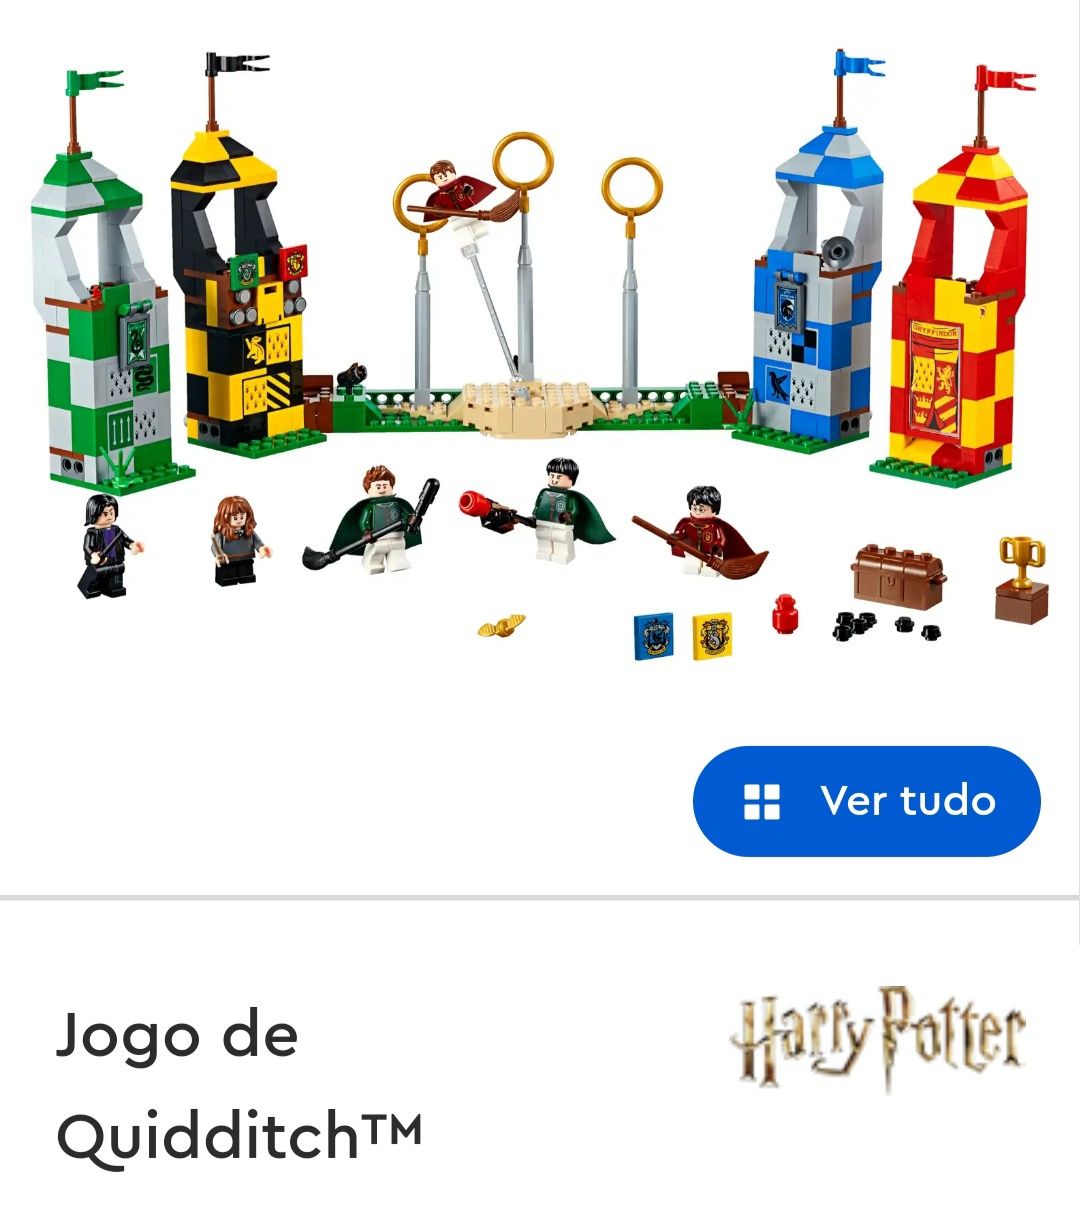 Lego Harry Potter Jogo de Quidditch